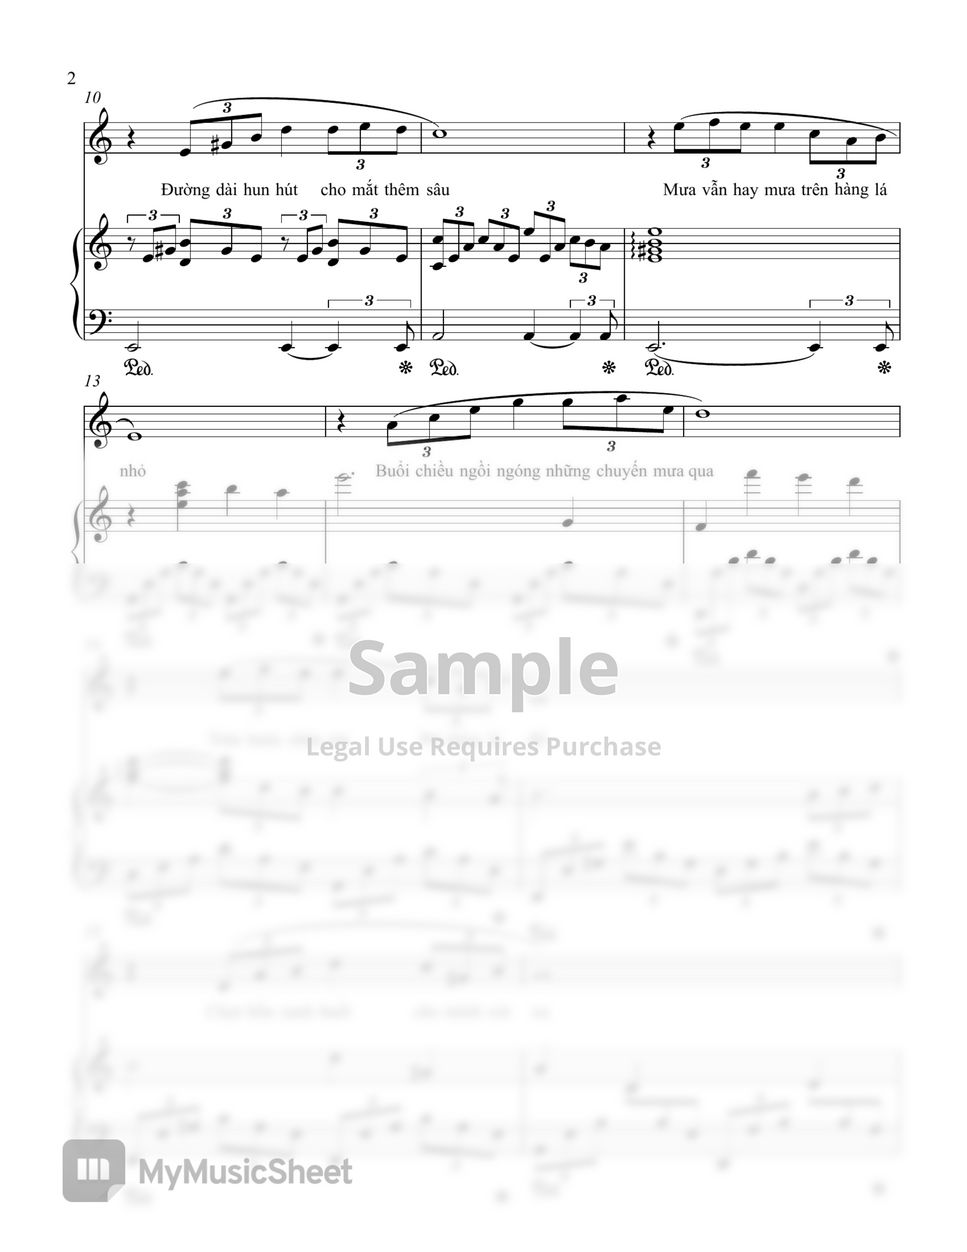 Diem Xua for Alto Saxophone and Piano Accompaniment by Hai Mai